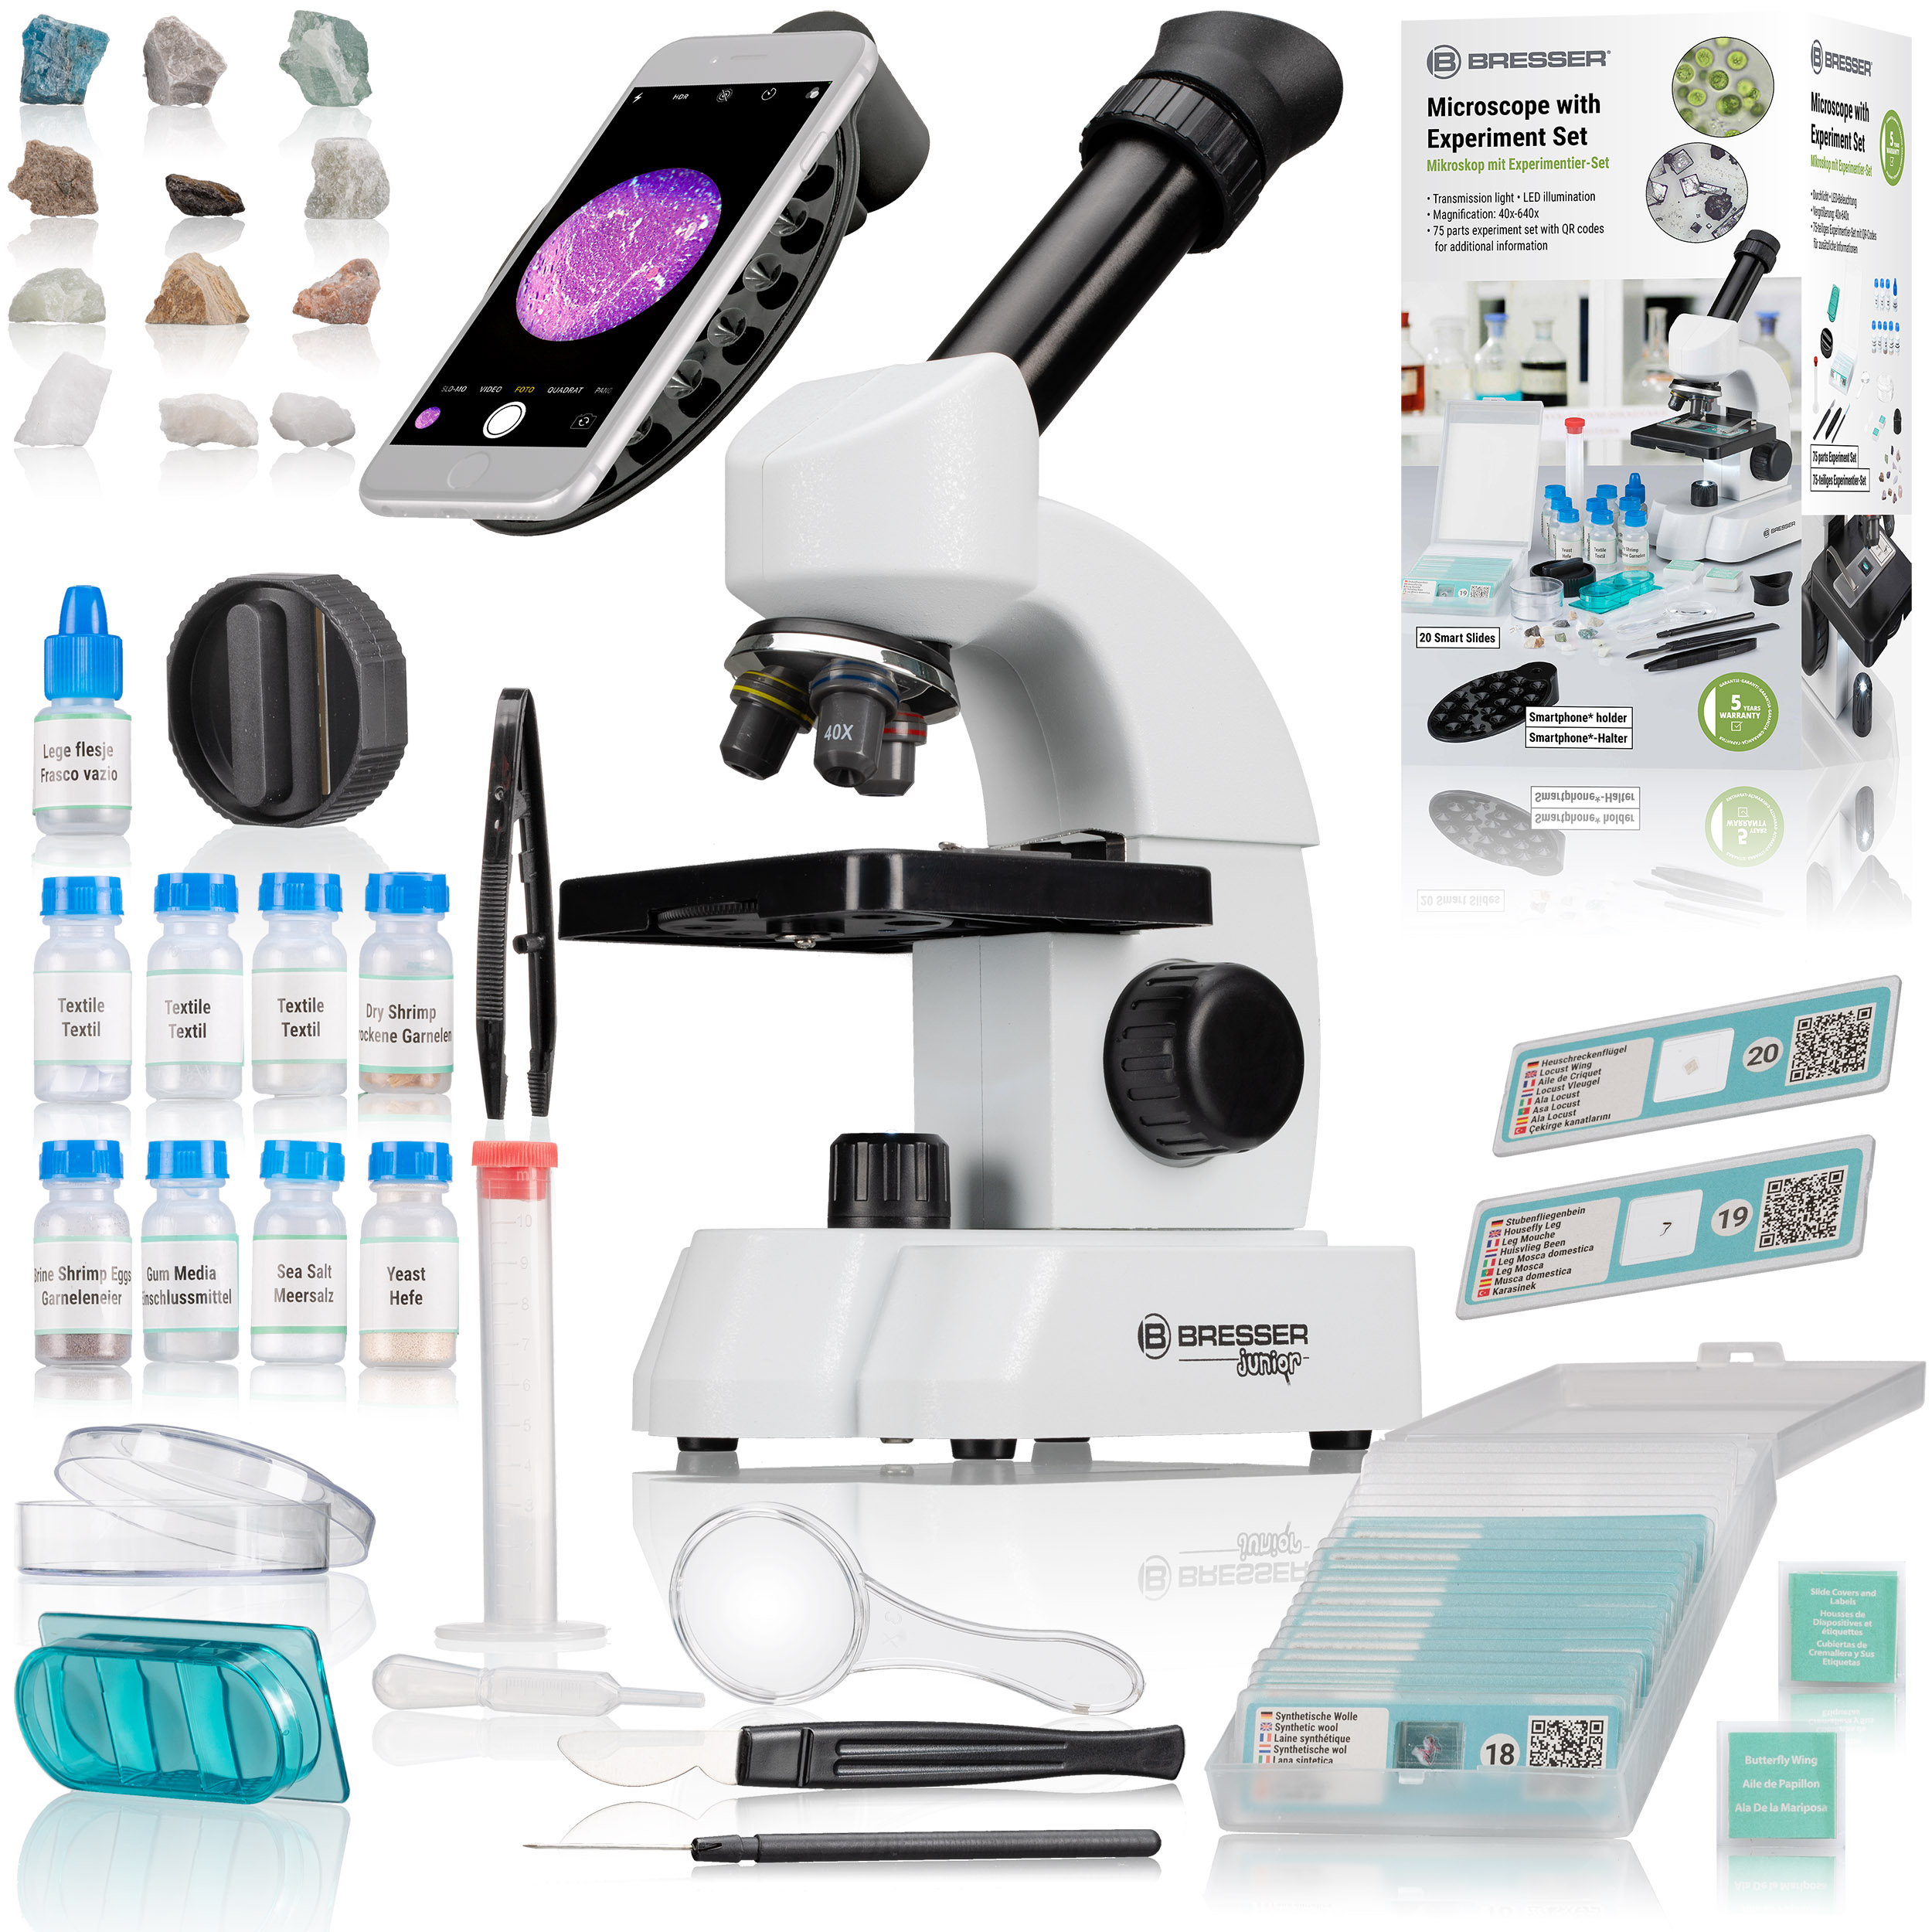 Portaobjetos para microscopio - Mundo Microscopio